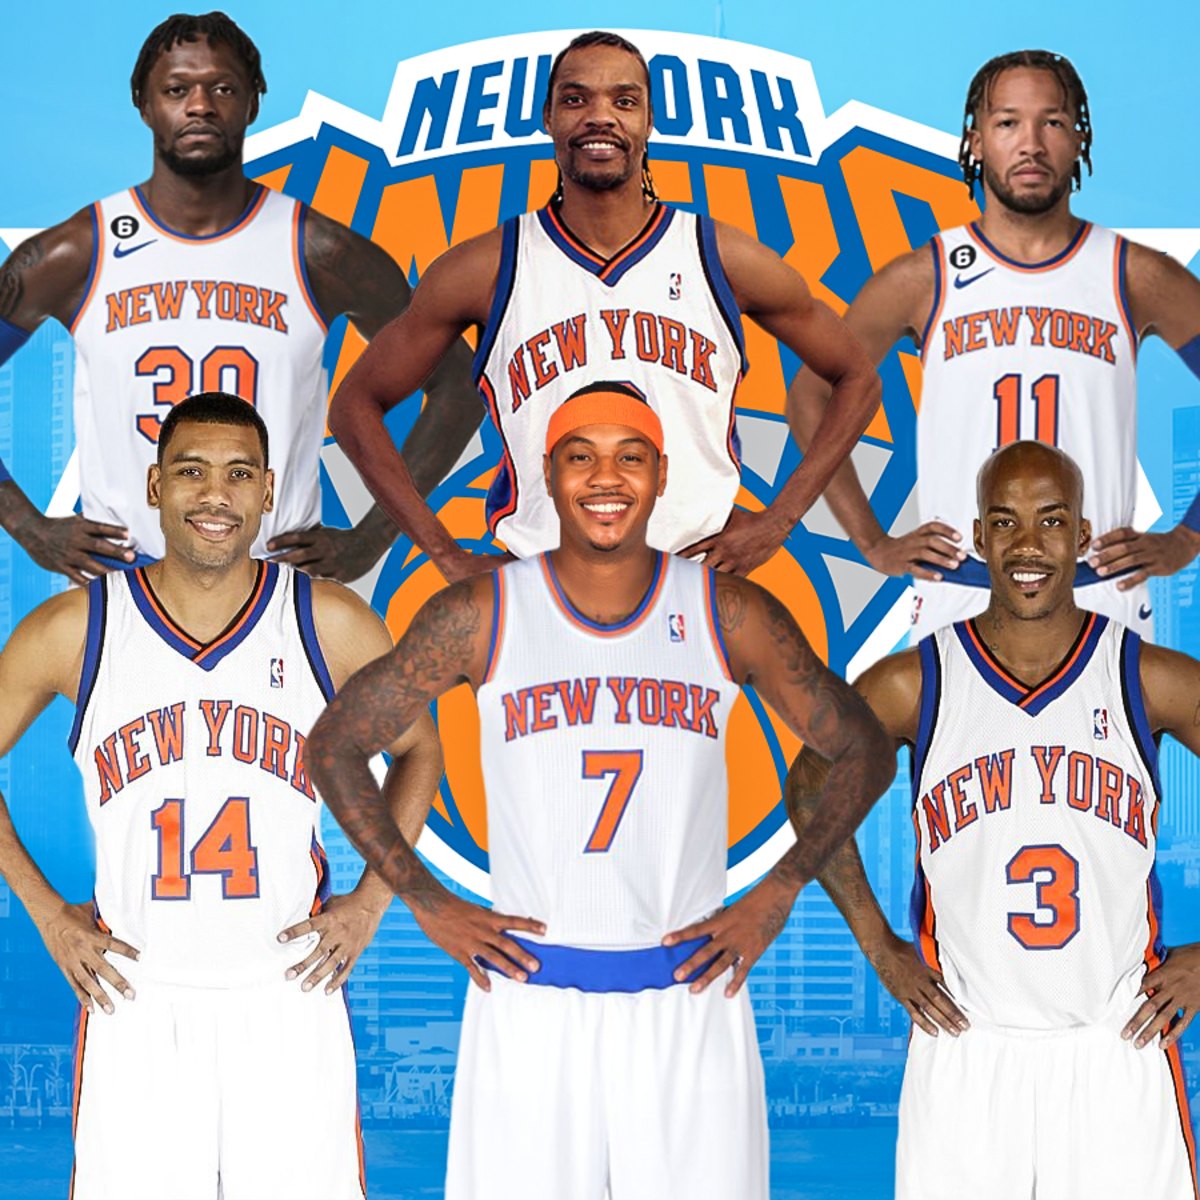 THIS IS NEW YORK! #Knicks  Nba new york, New york knicks, Knicks team